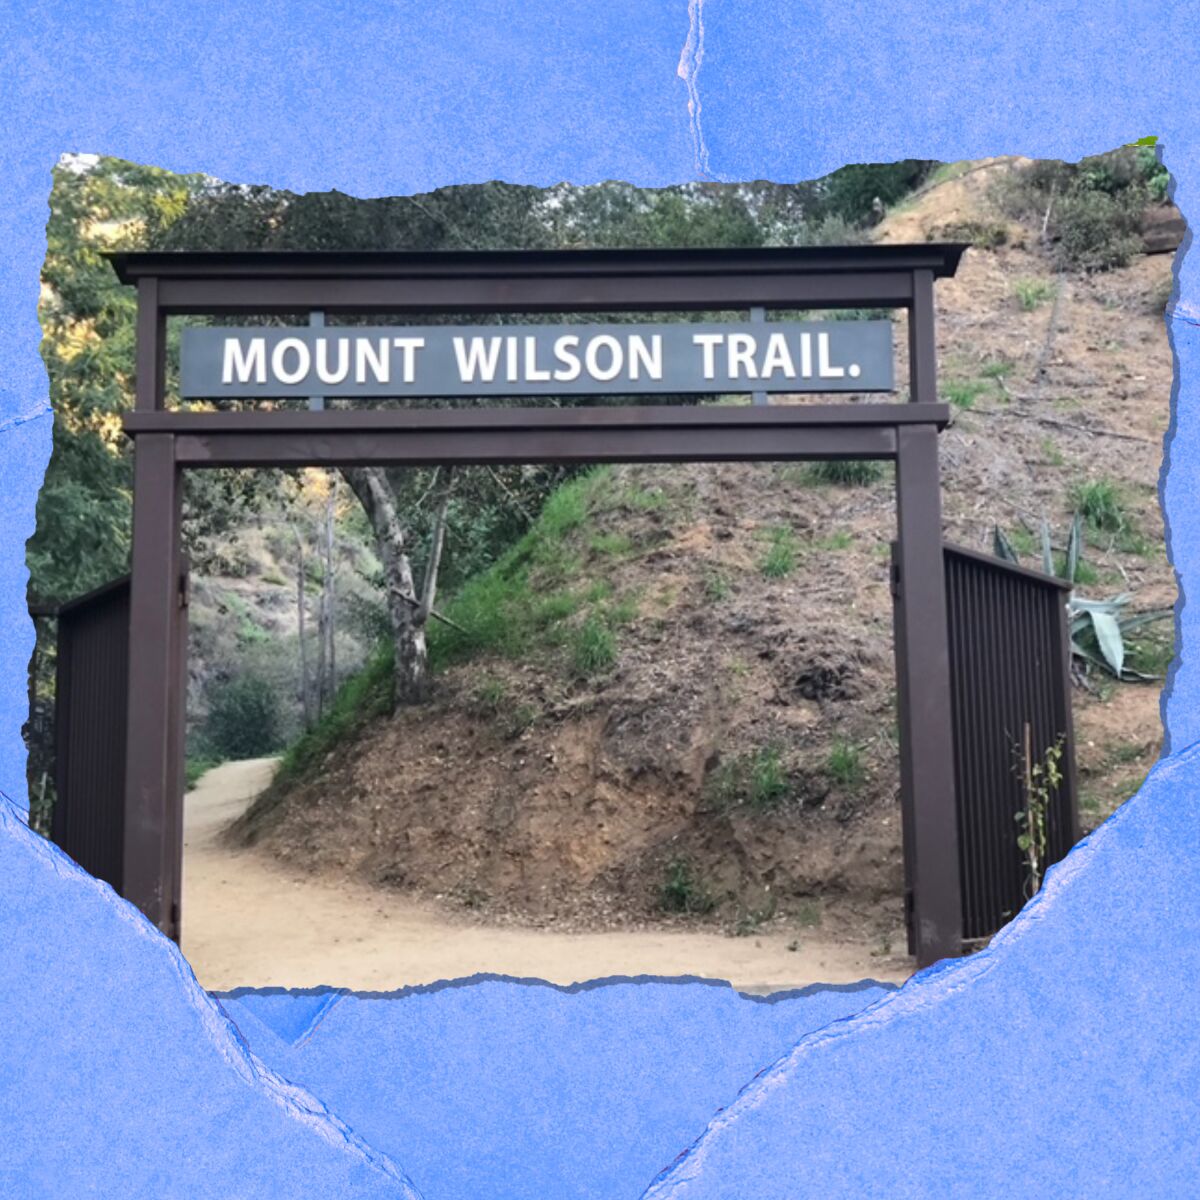 Mount Wilson trail entrance